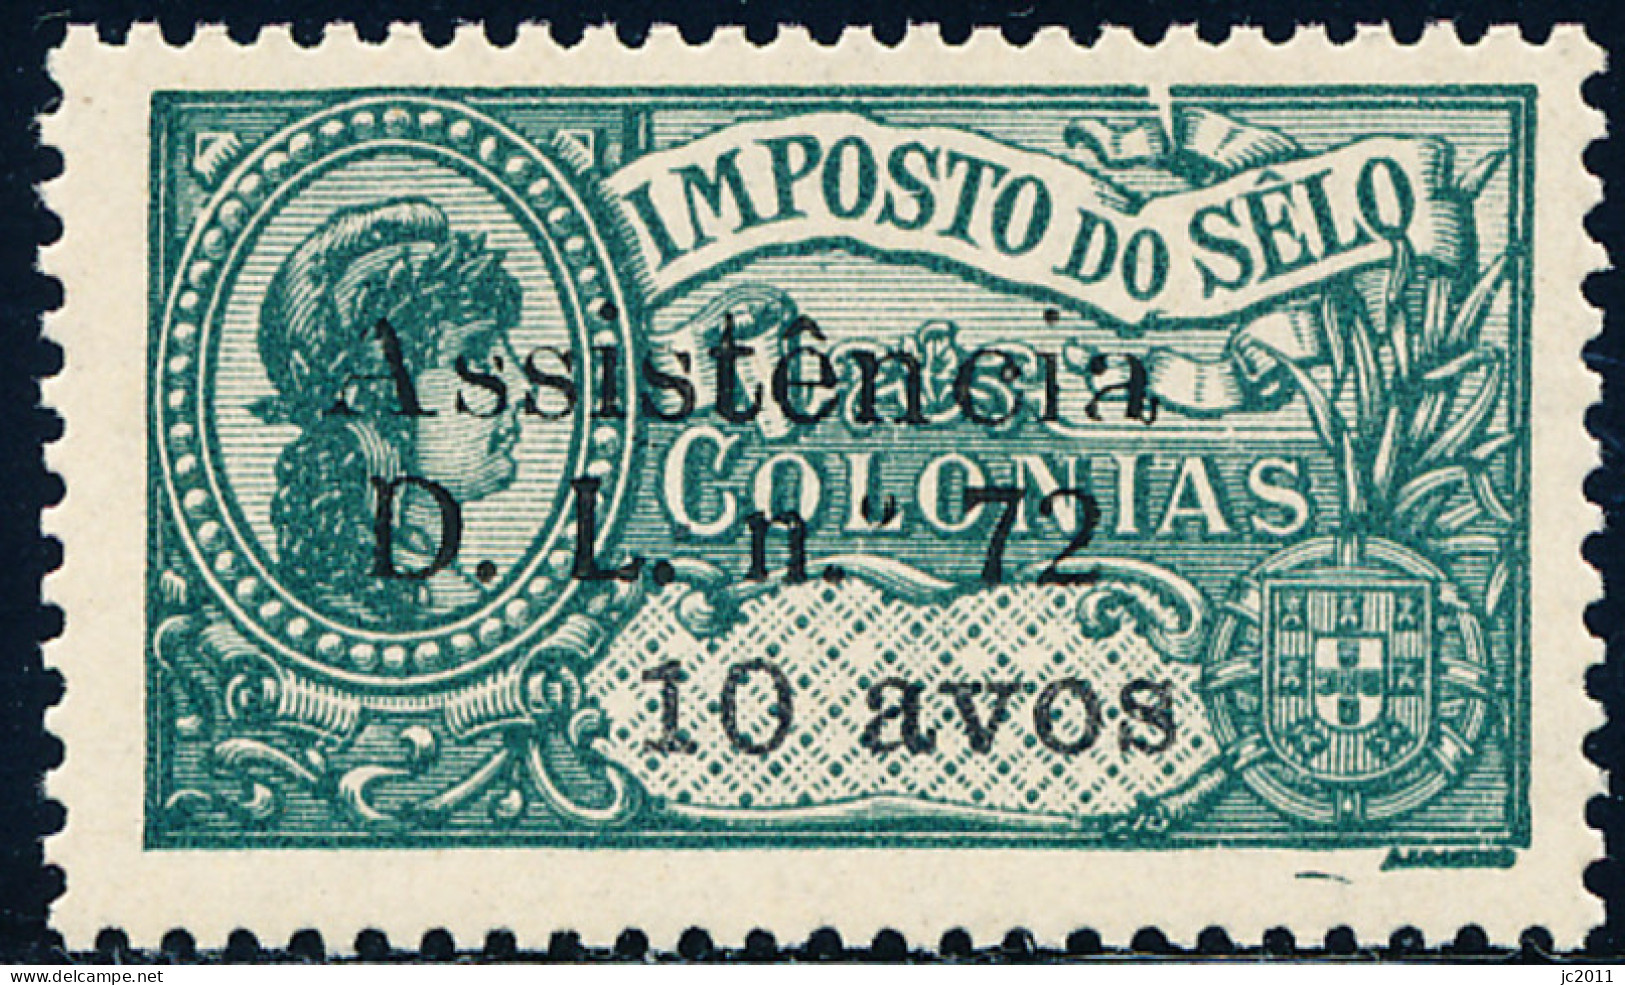 Timor - 1936 / 1937 - Tax Stamp / Assistência - MNH - Timor